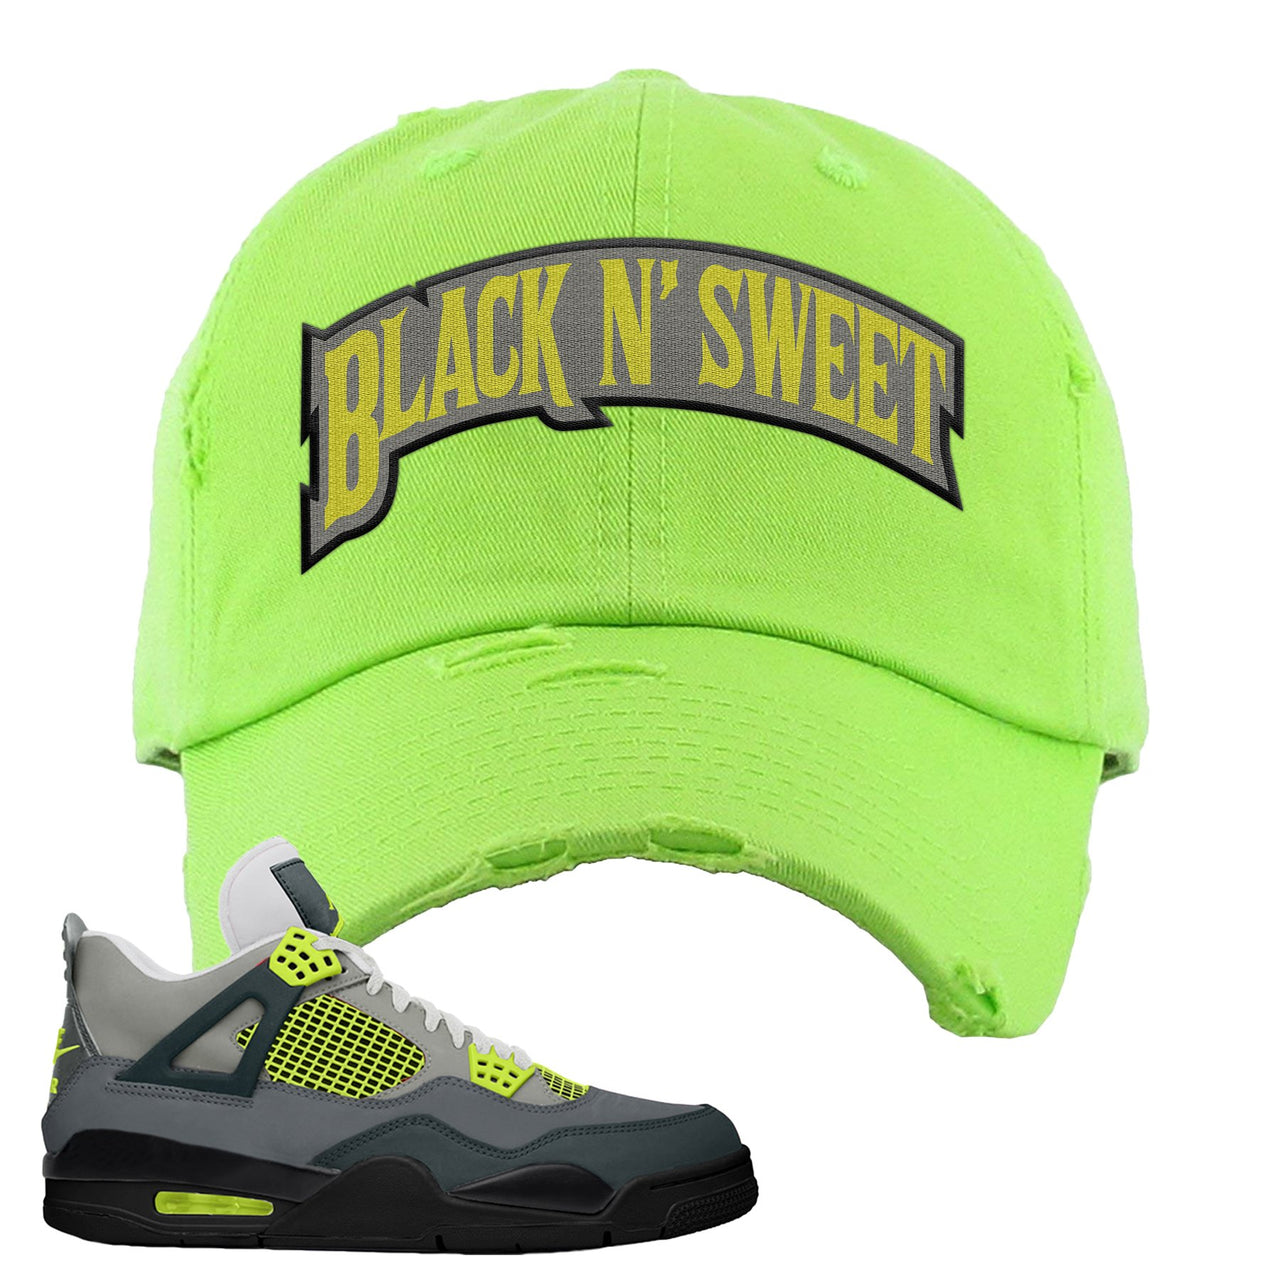 Jordan 4 Neon Sneaker Light Gray Distressed Dad Hat | Hat to match Nike Air Jordan 4 Neon Shoes | Black N Sweet Arch